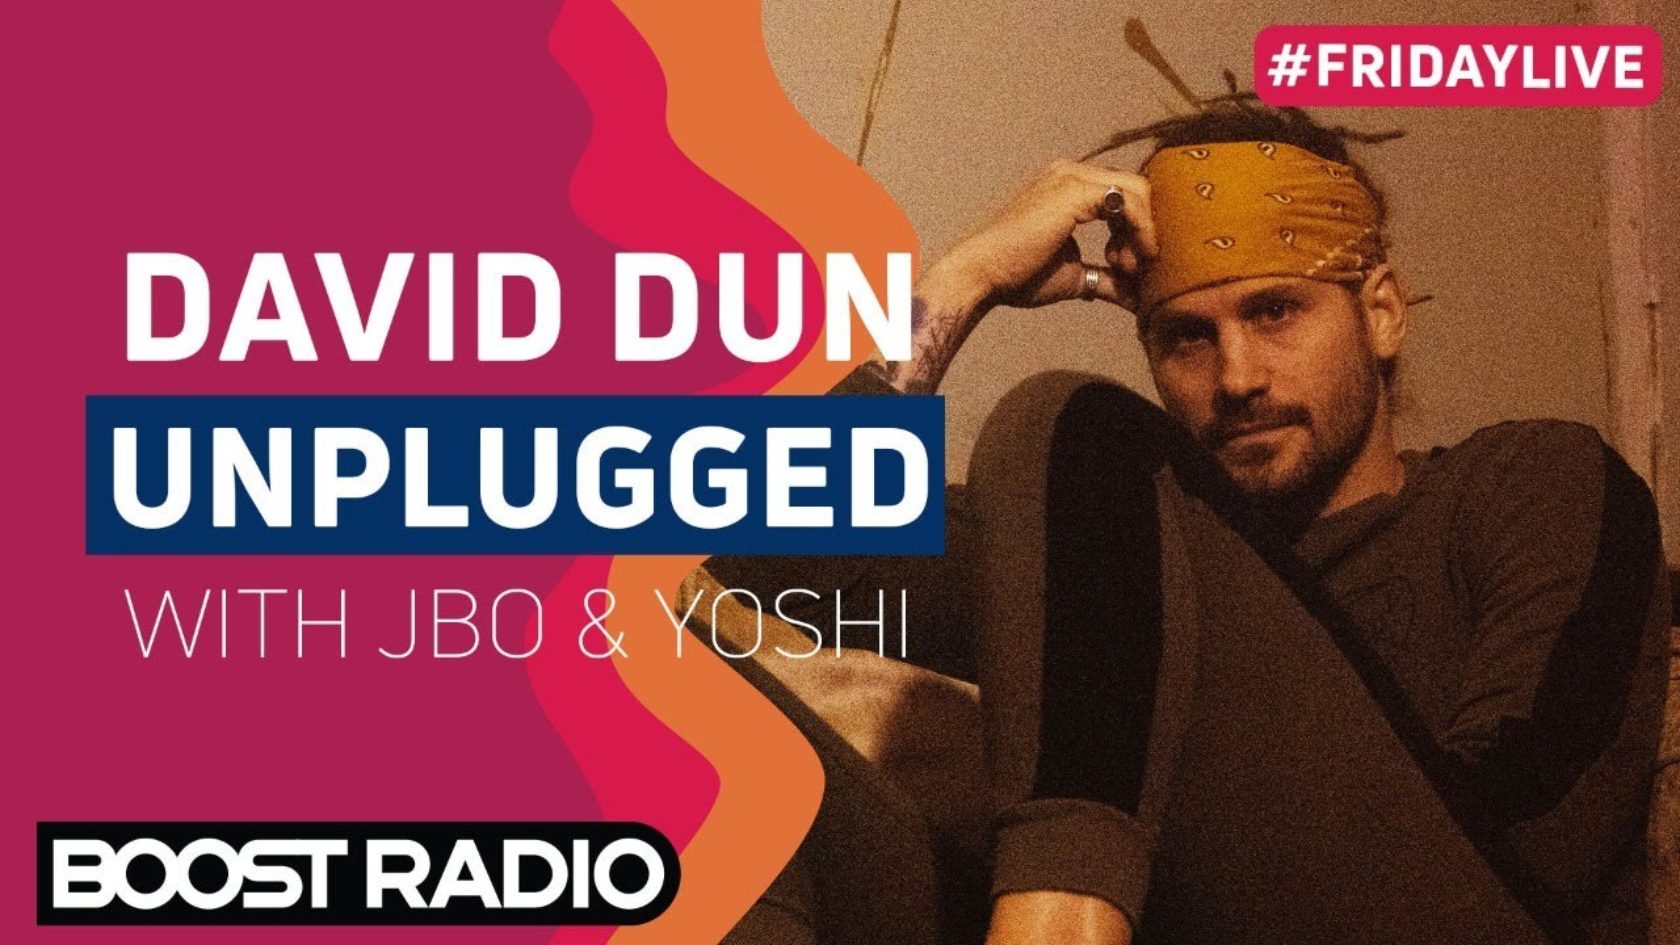 David Dunn - Friday LIVE with JBo & Yoshi